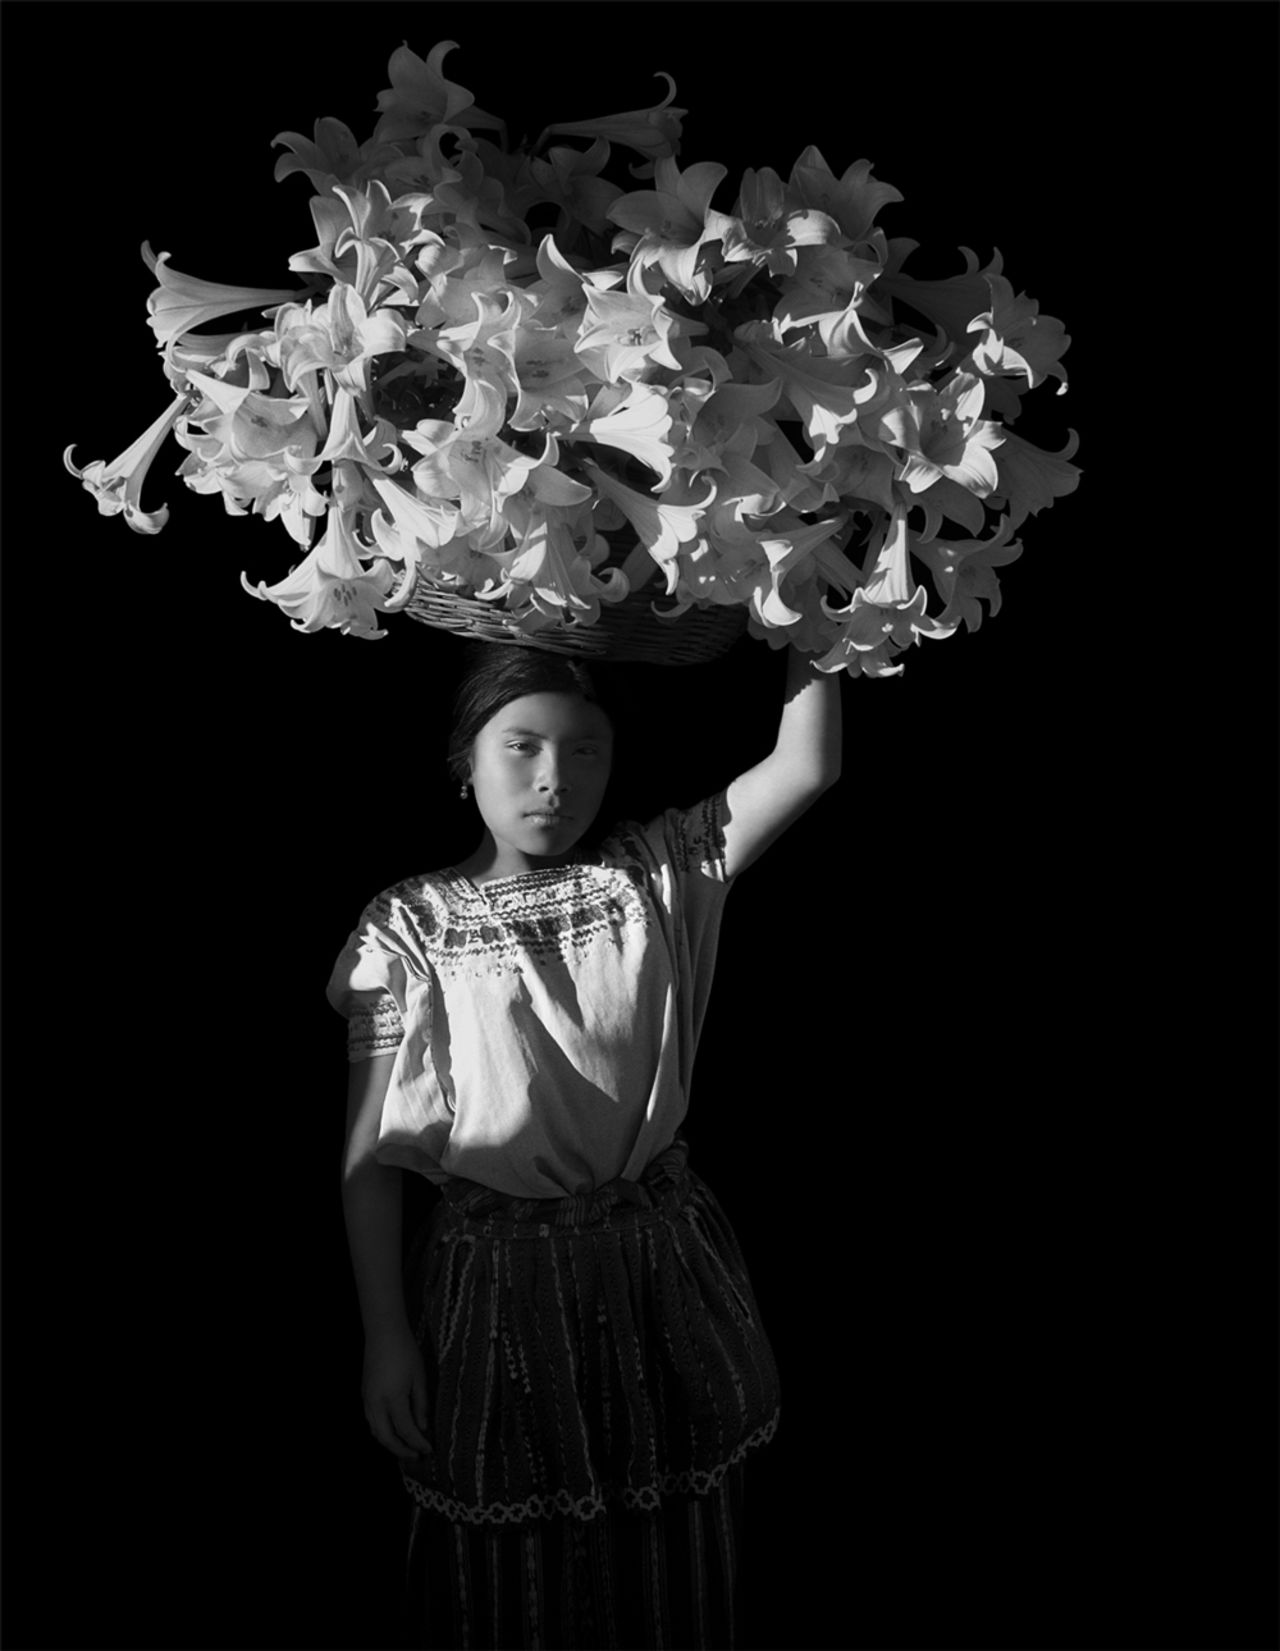 "Basket of Light, Sumpango, Guatemala" (1989) by Mexican photographer Flor Garduño